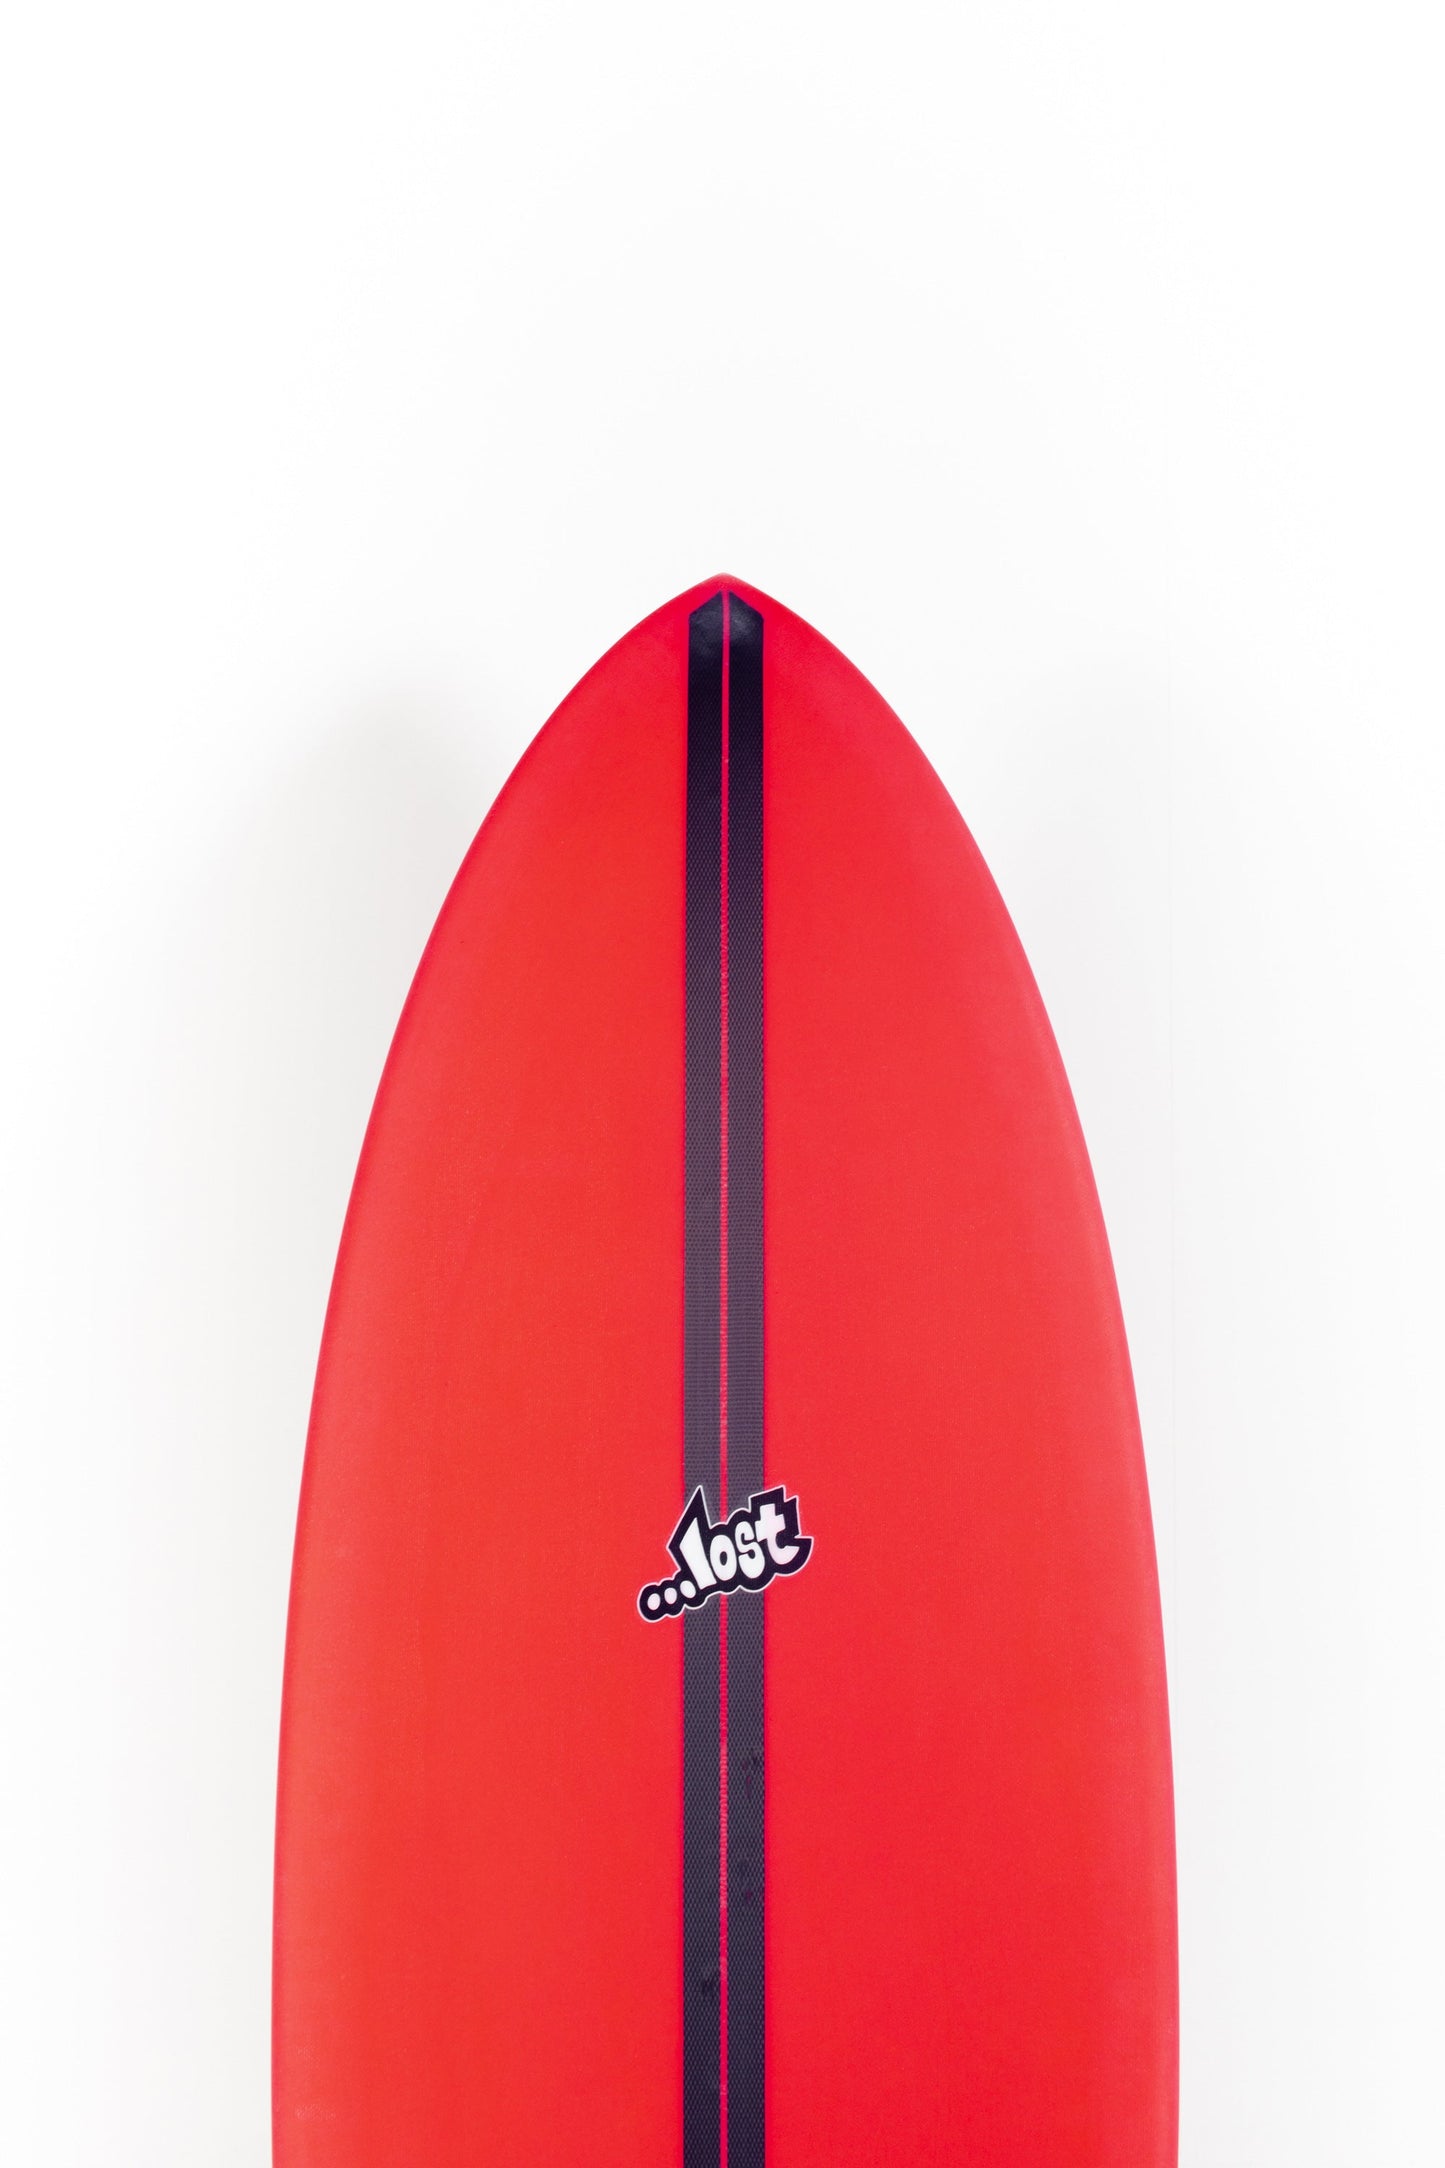 
                  
                    Pukas Surf Shop - Lost Surfboard - ROUND NOSE FISH - RNF '96 - Light Speed - 5'7"x 20" x 2.44 x 31L
                  
                